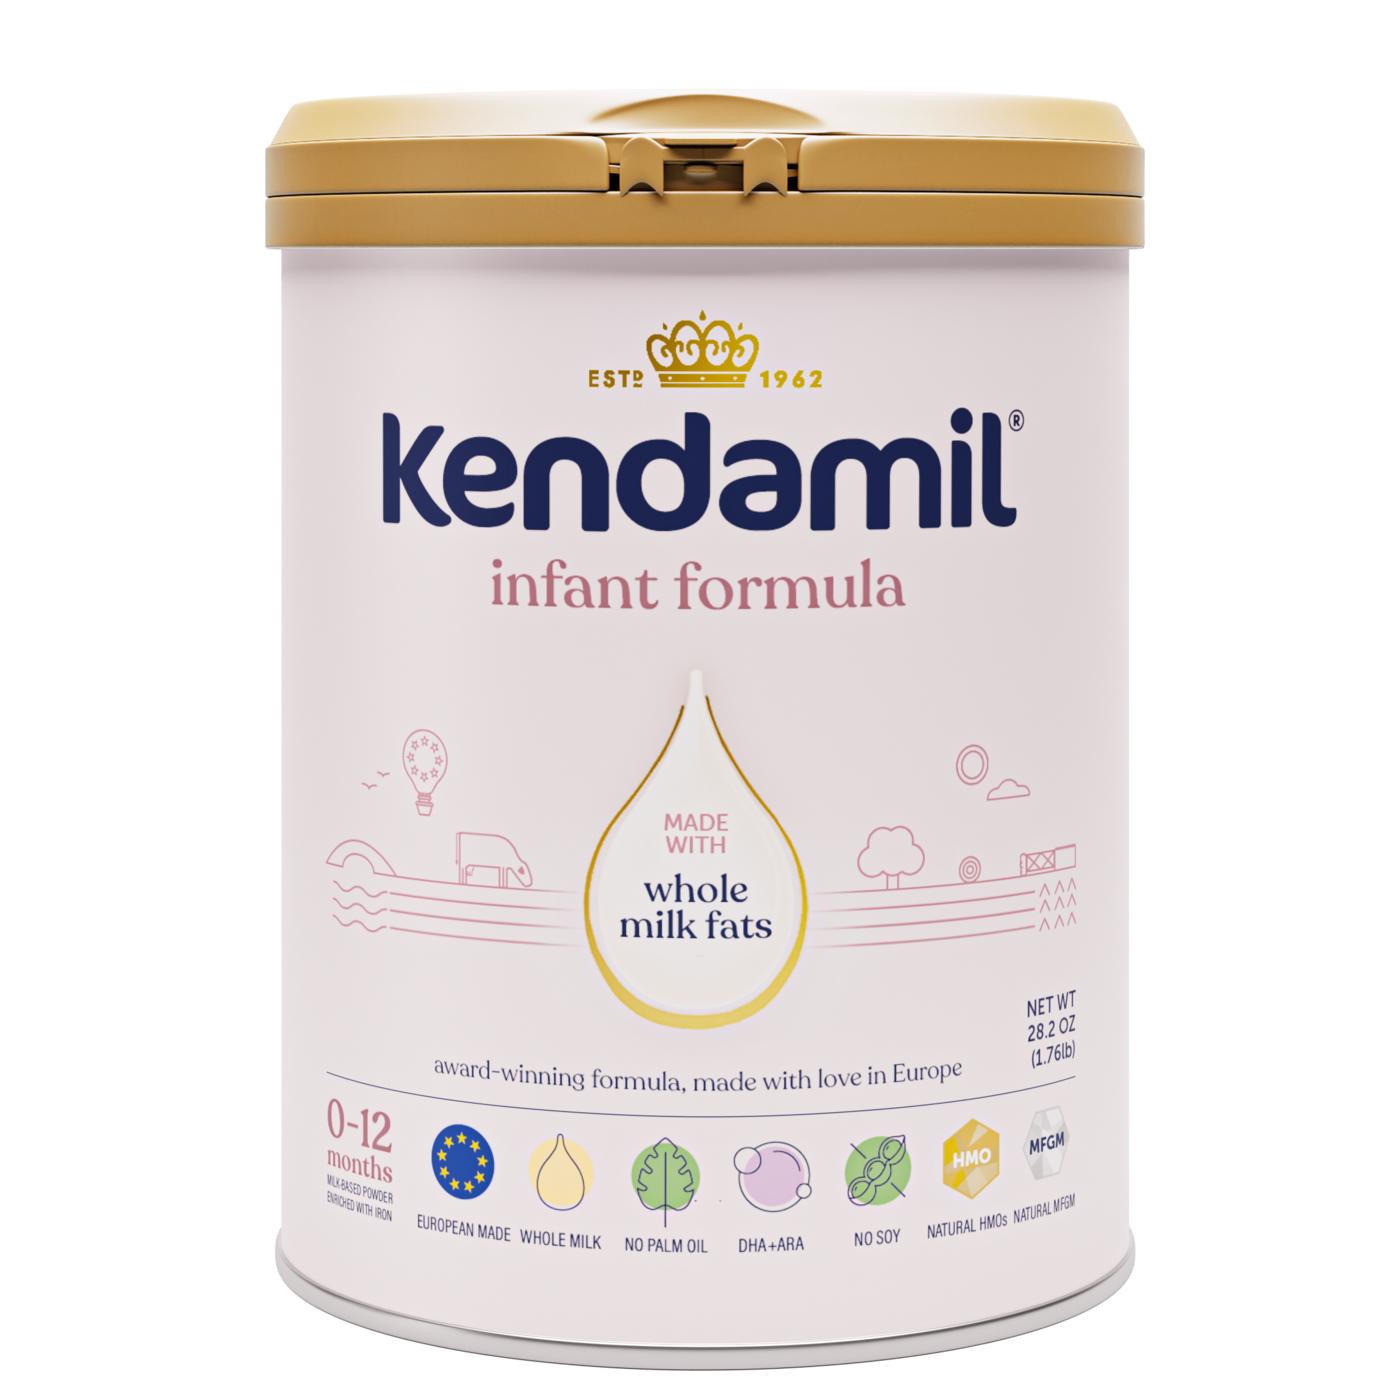 Kendamil Infant Formula; image 1 of 3